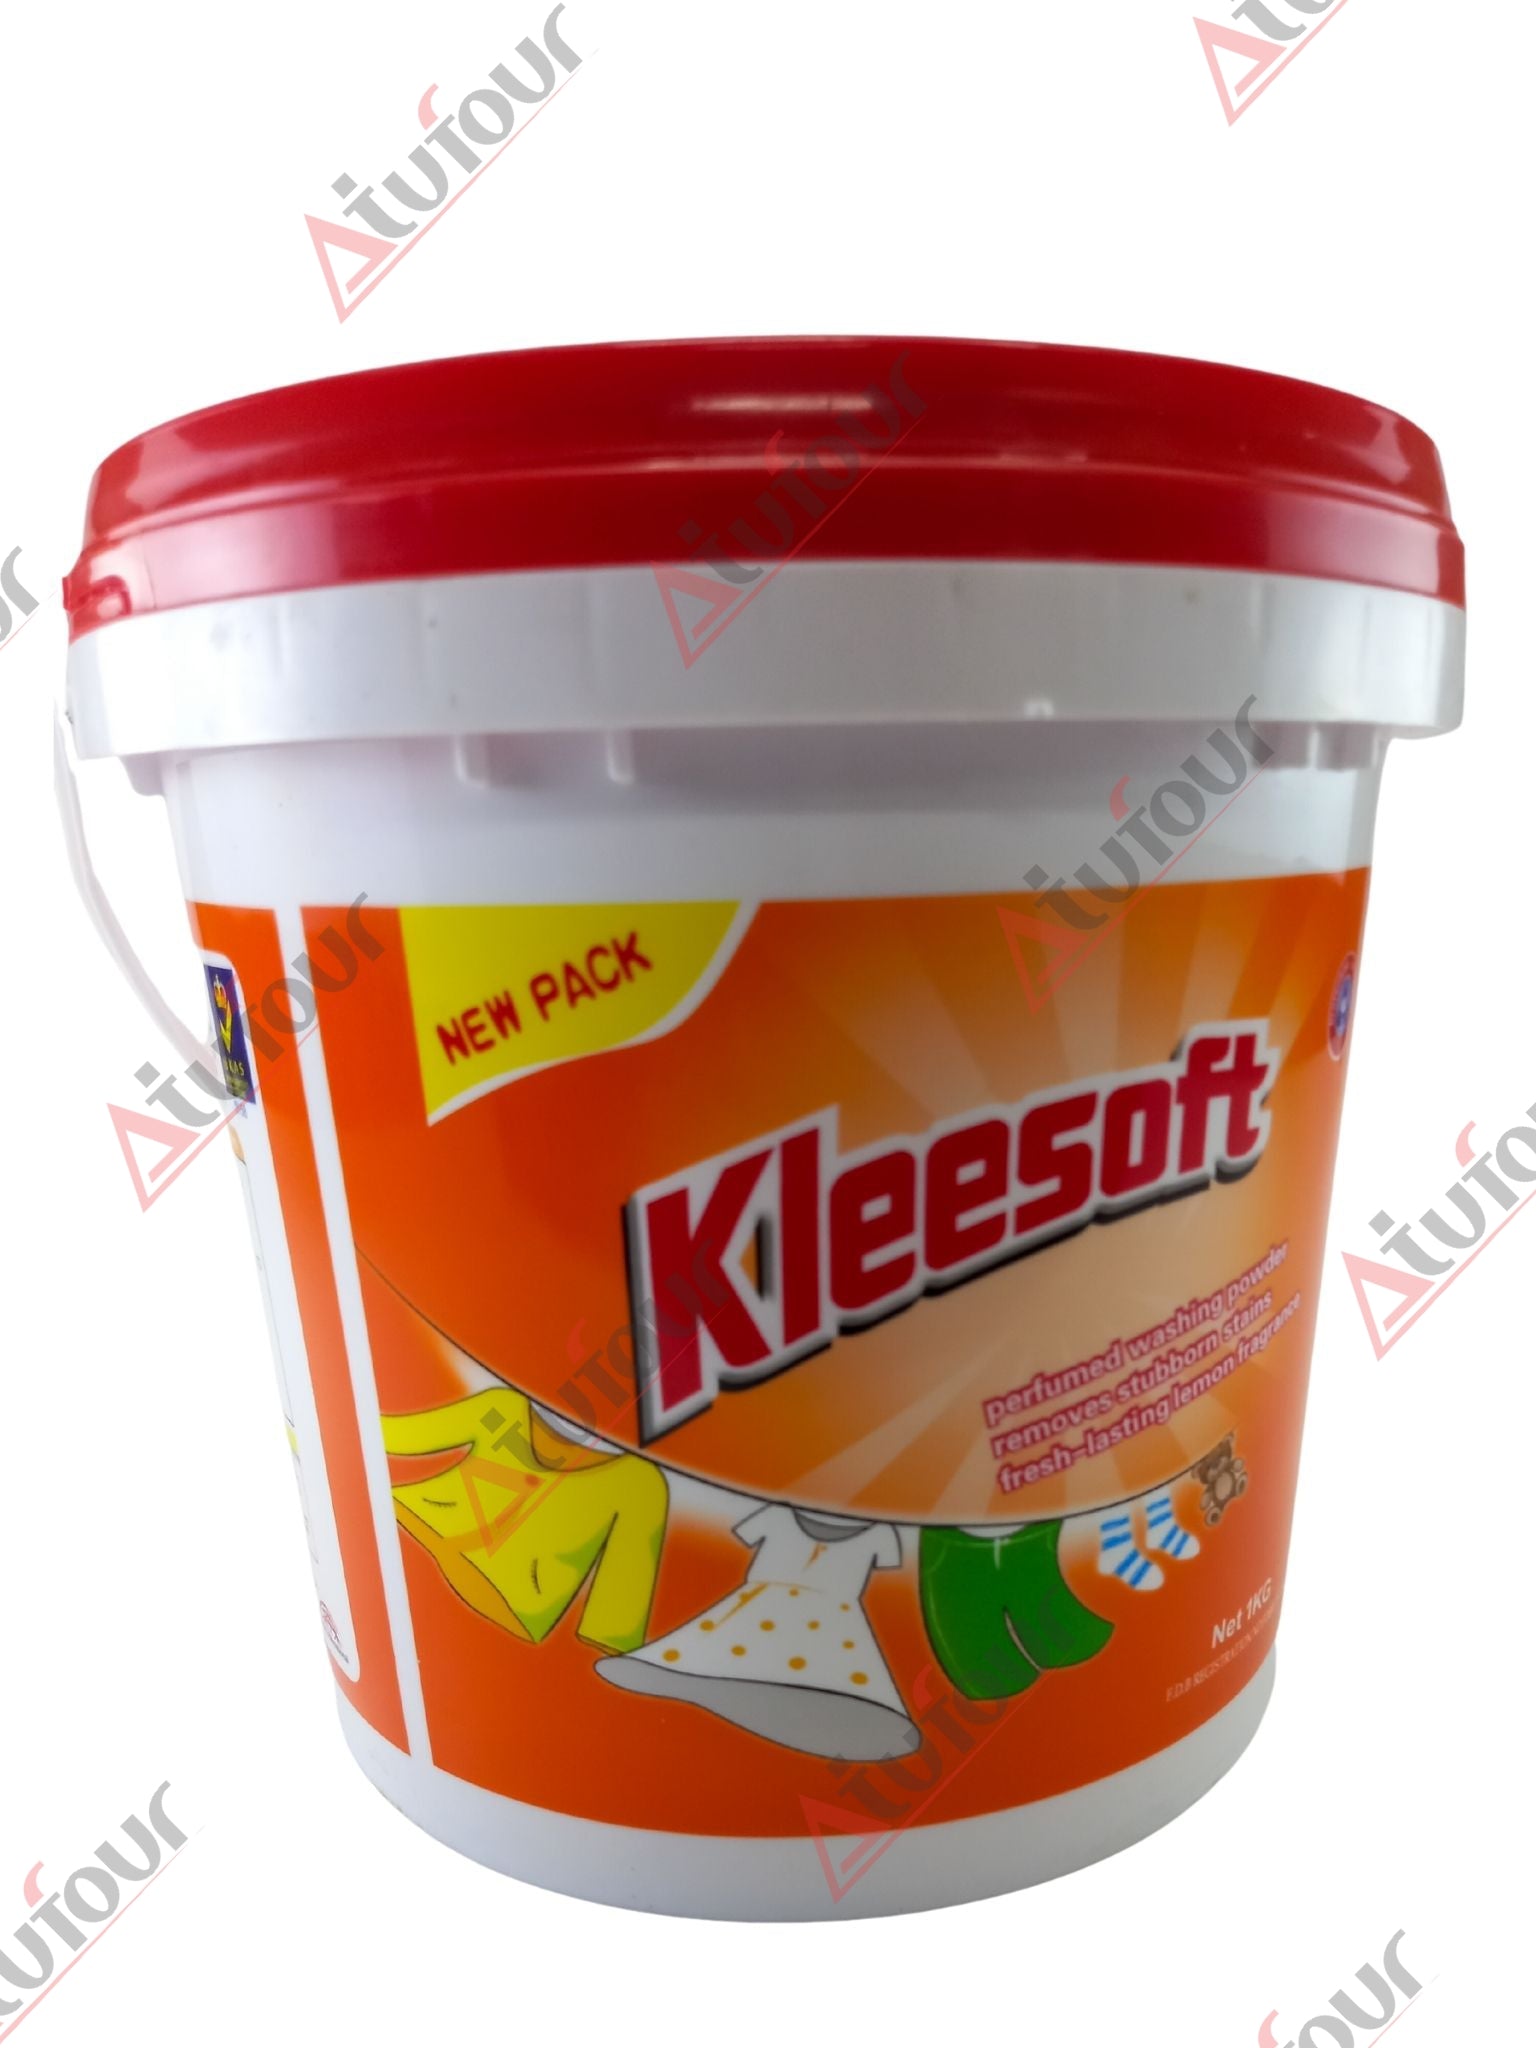 Kleesoft Bucket Washing Powder 3kg